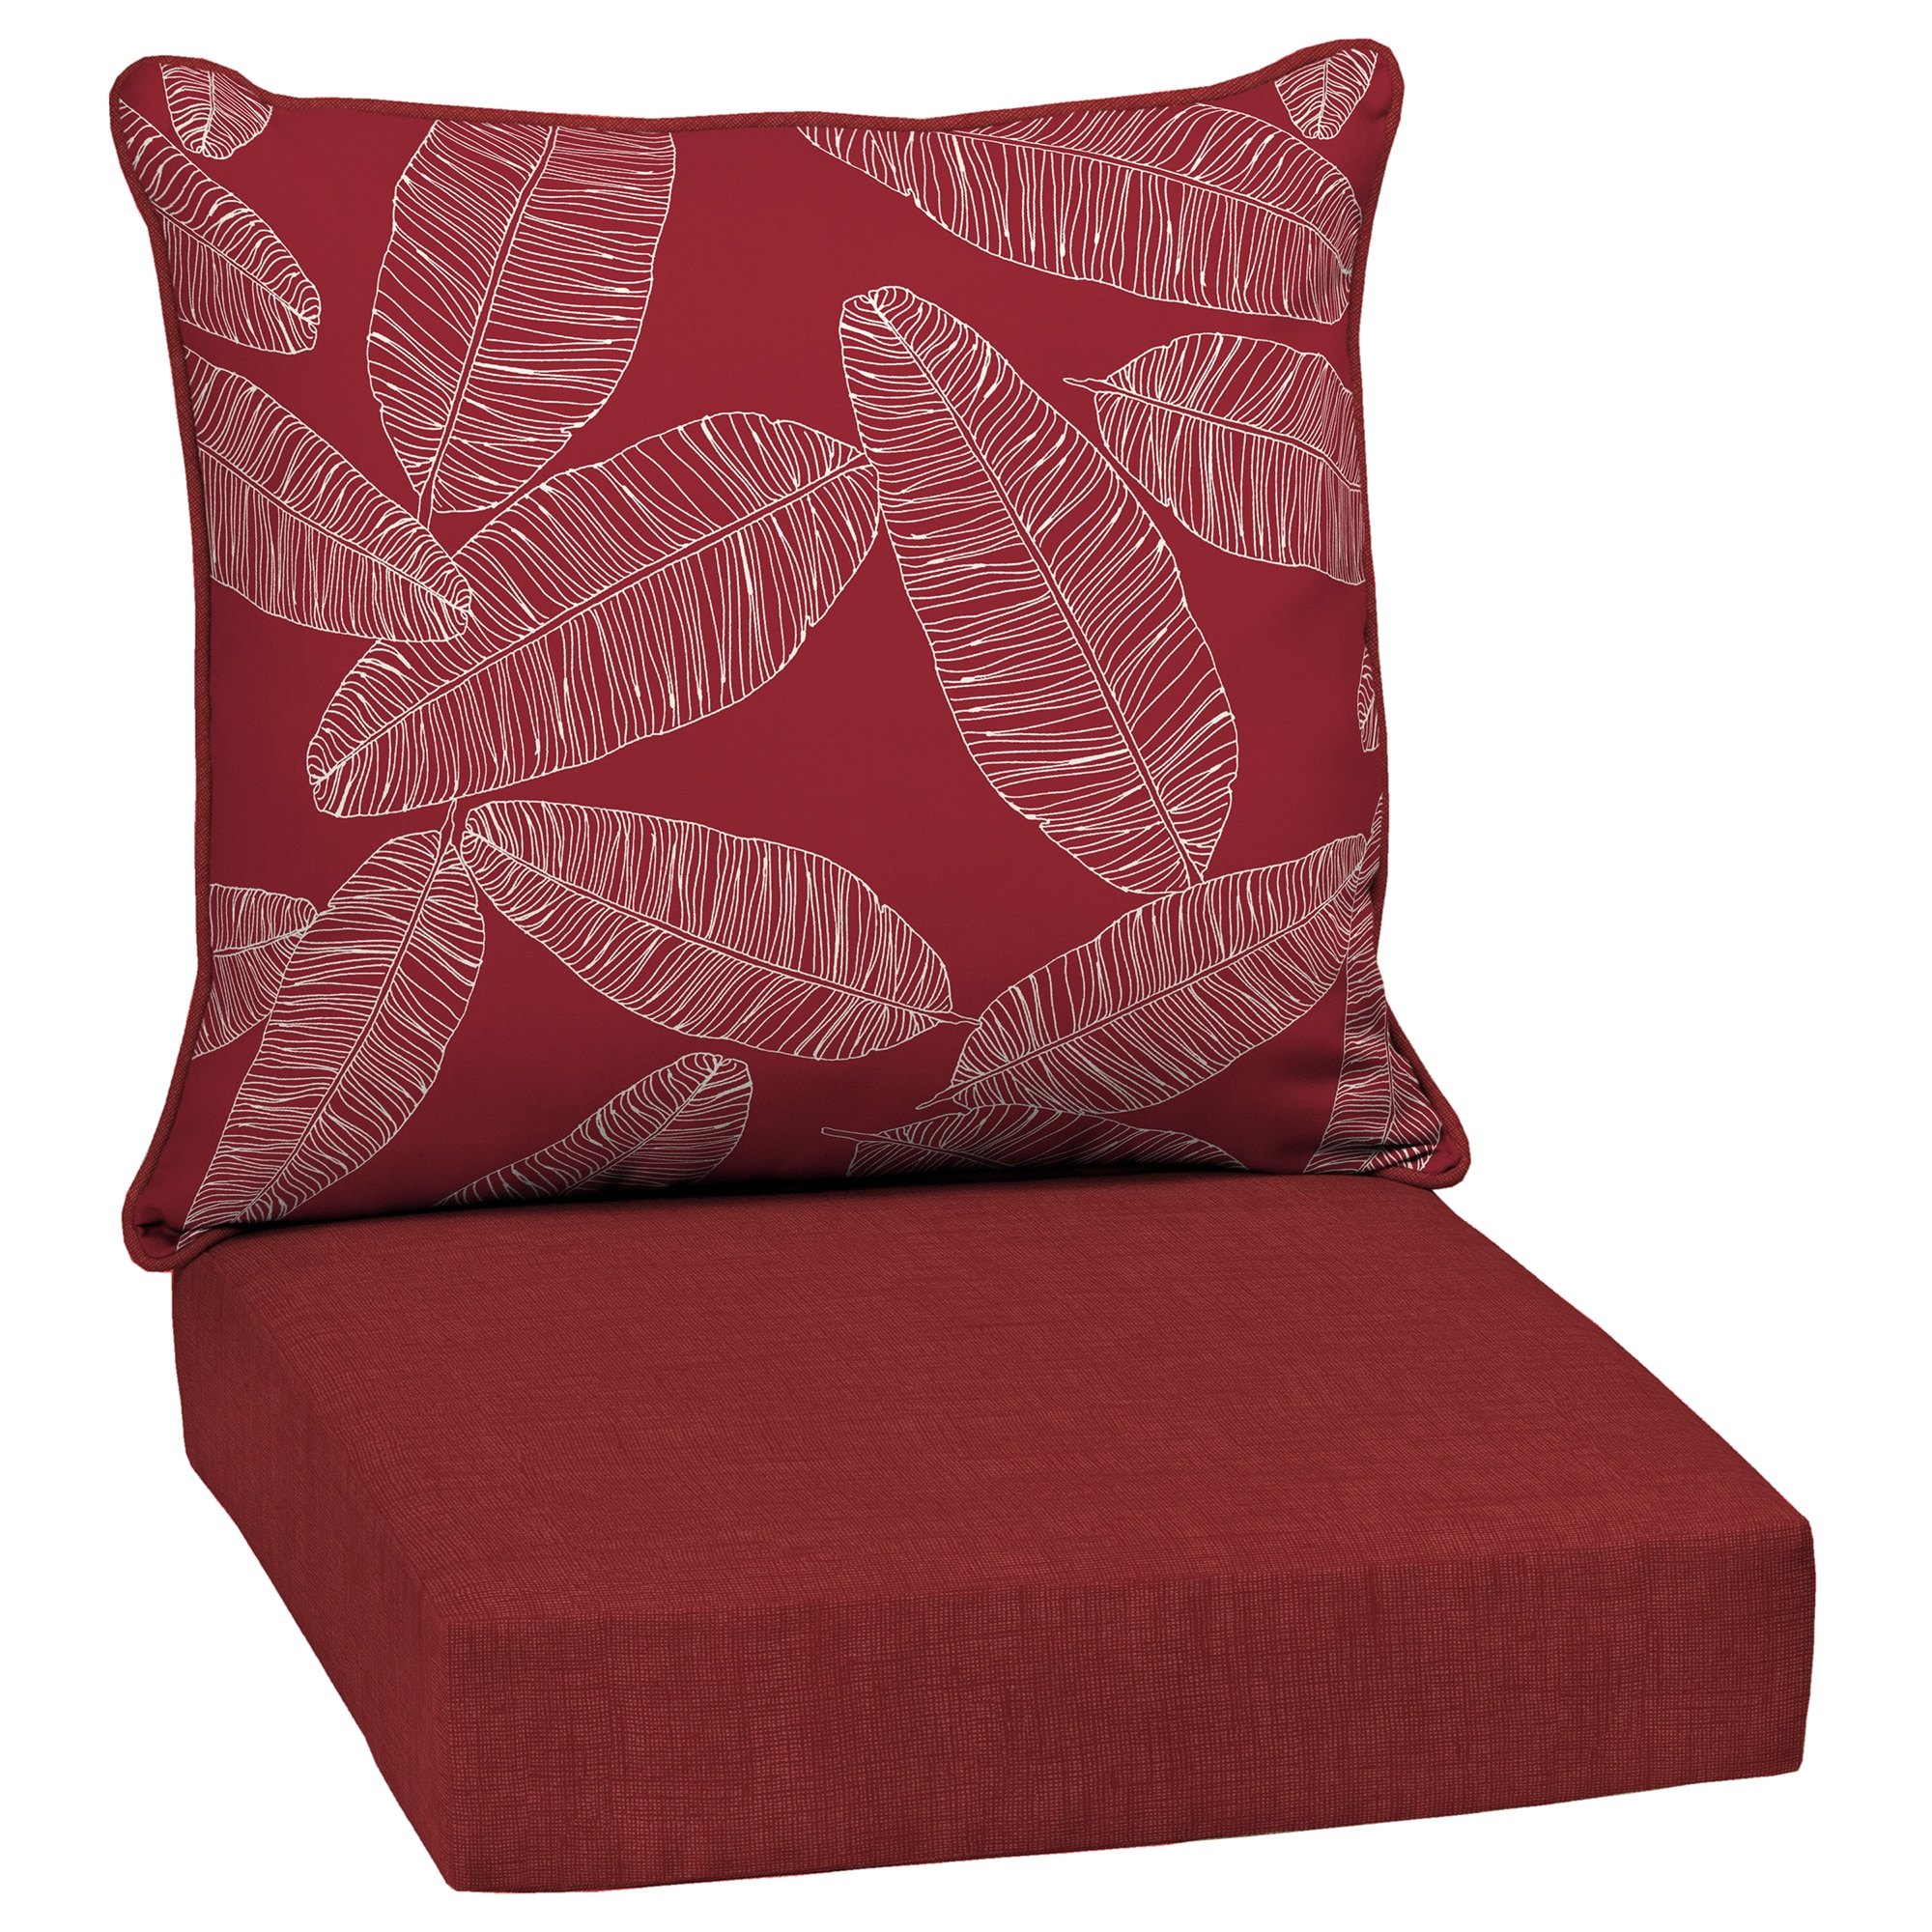 Leala Texture Deep Seat Outdoor Cushion Set Moss - Arden Selections